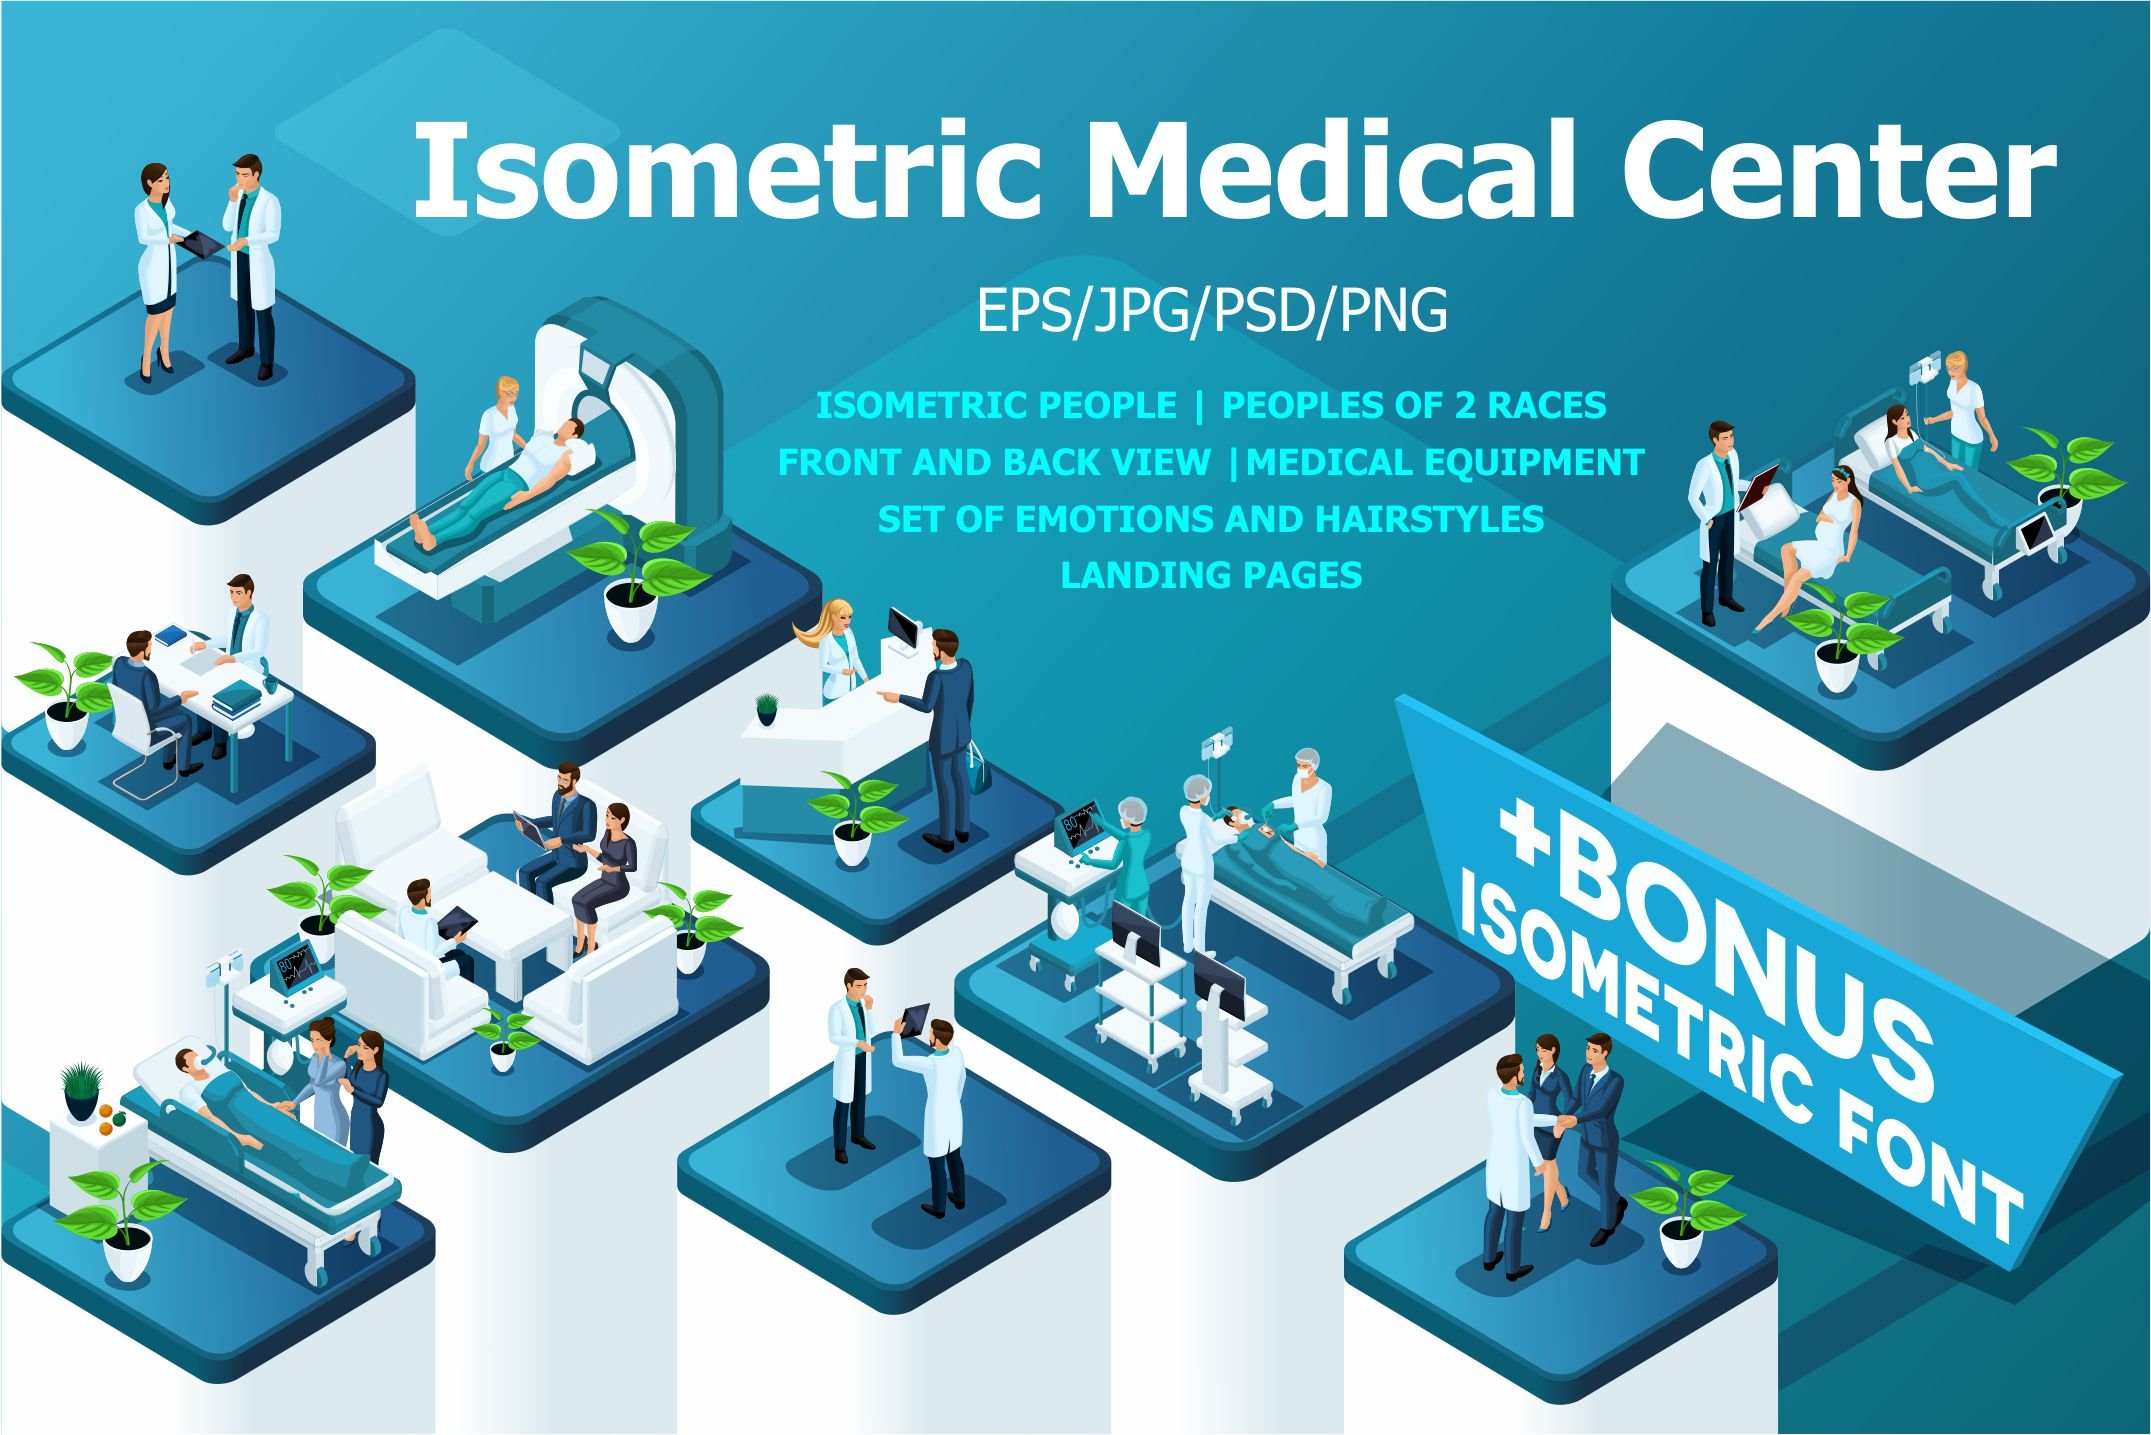 Large Kit Isometric Medical Center cover image.